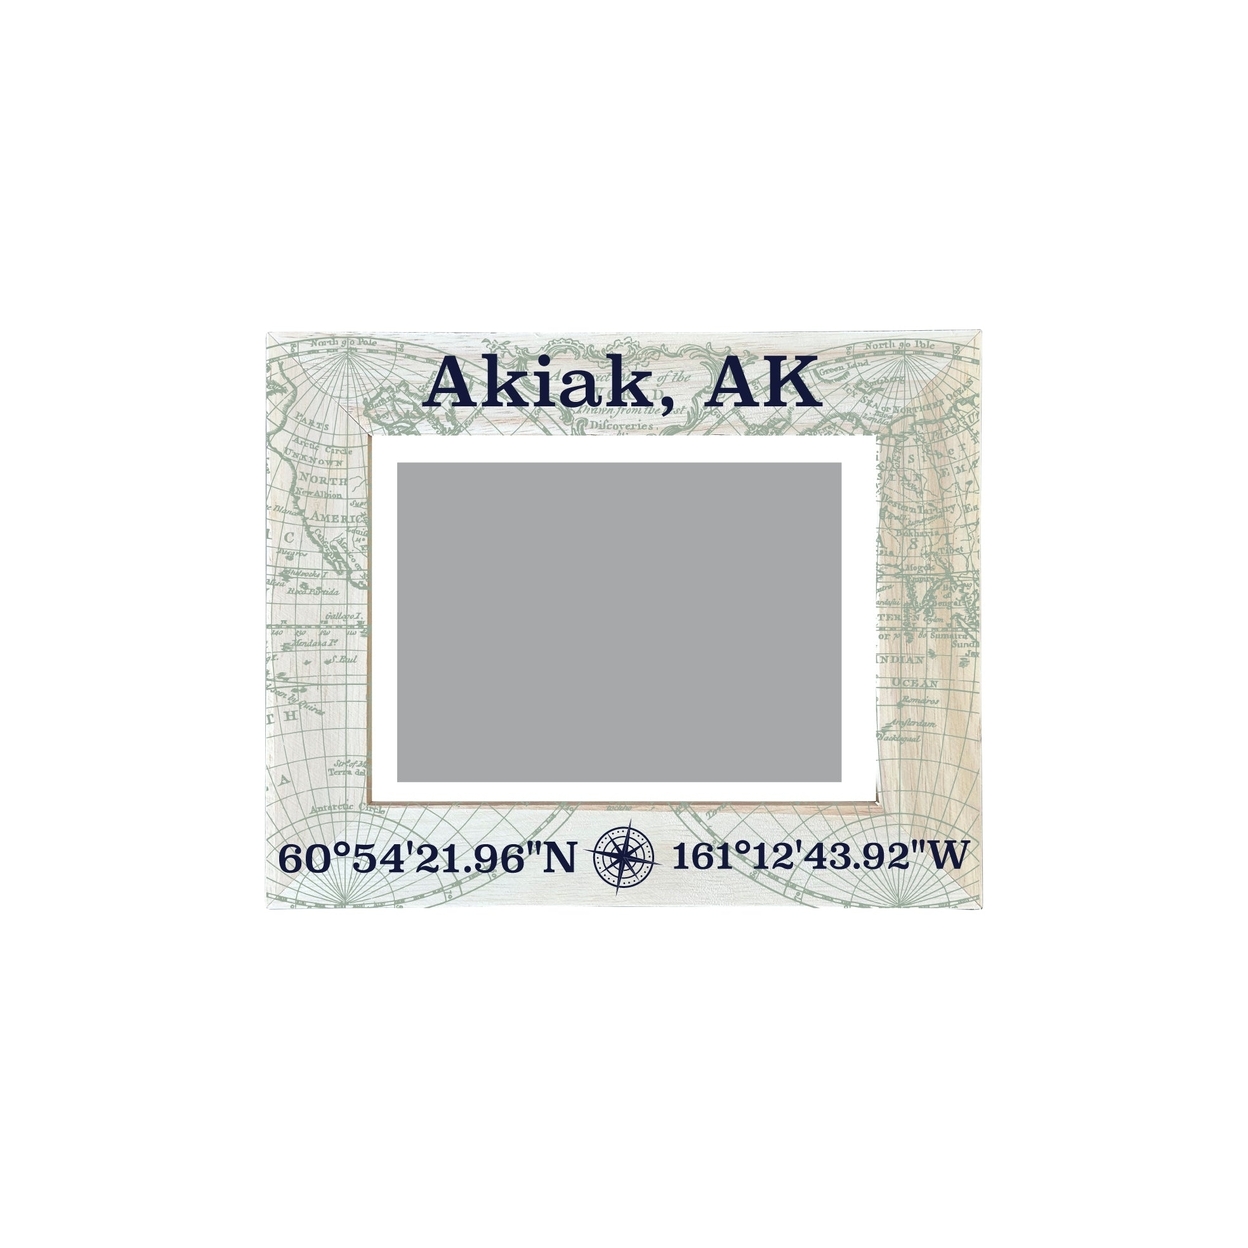 Akiak Alaska Souvenir Wooden Photo Frame Compass Coordinates Design Matted To 4 X 6